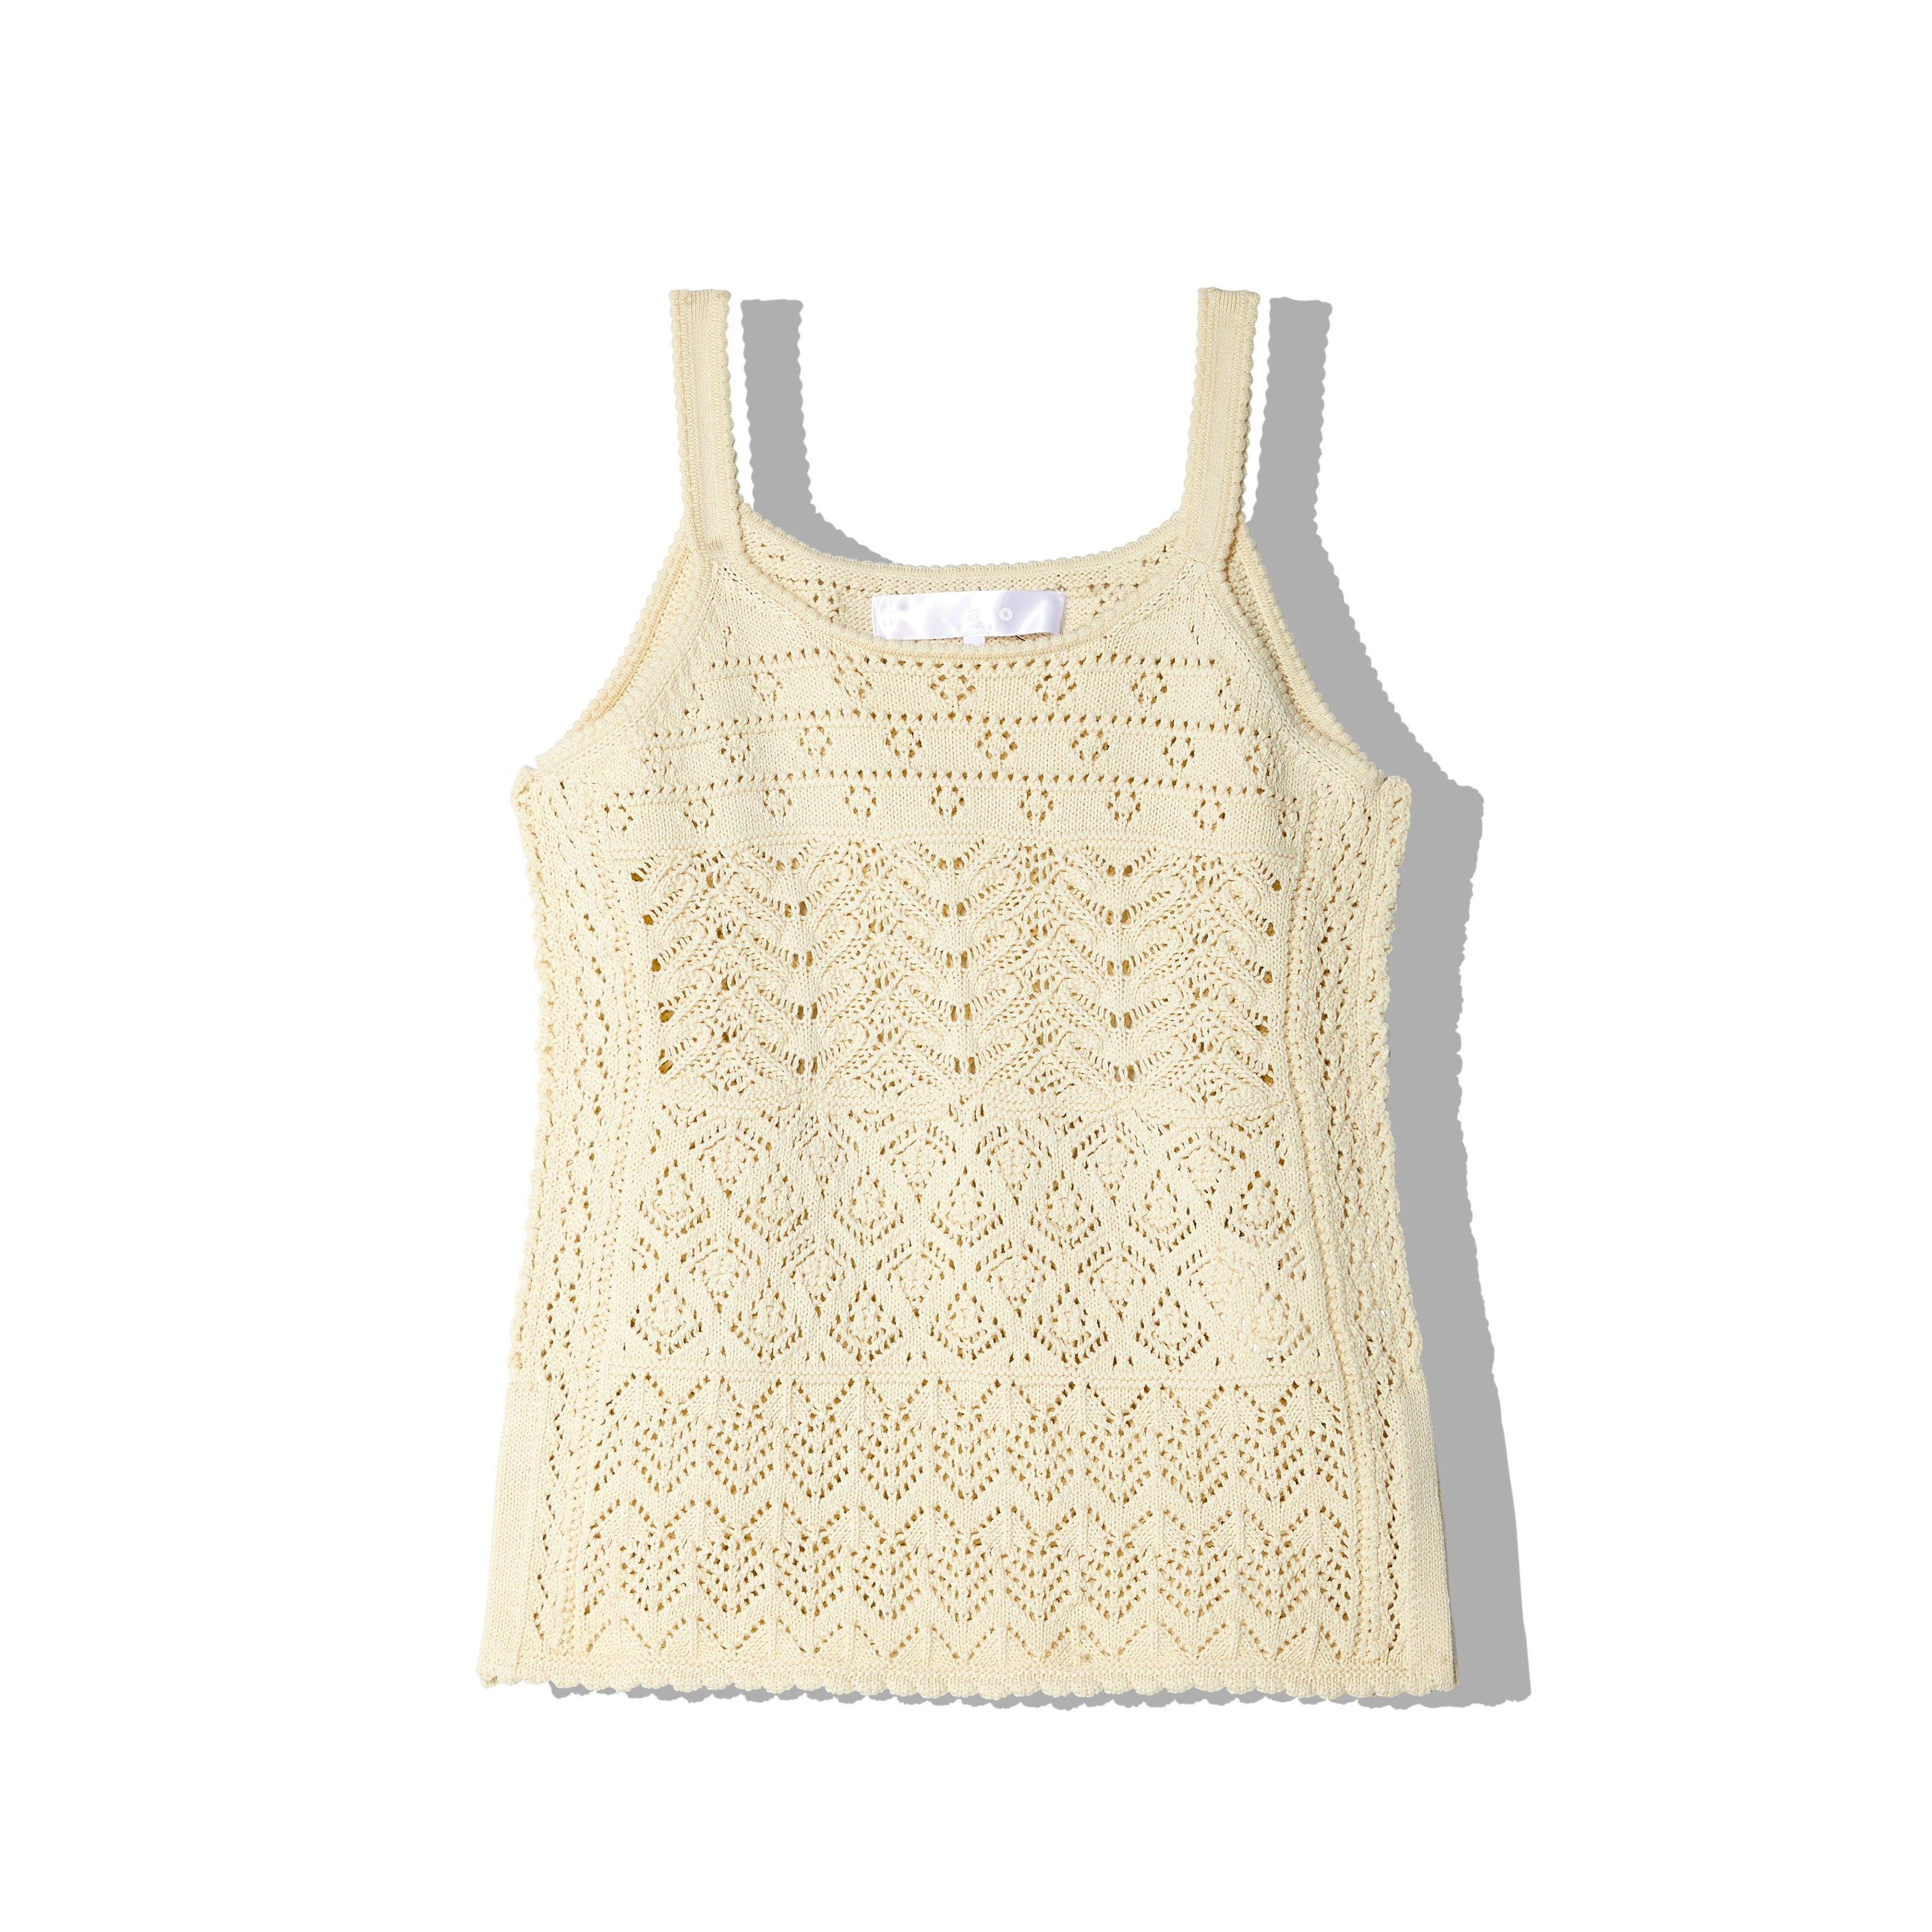 Tao - Women's Cotton Lace Crochet Vest - (Off White) by TAO